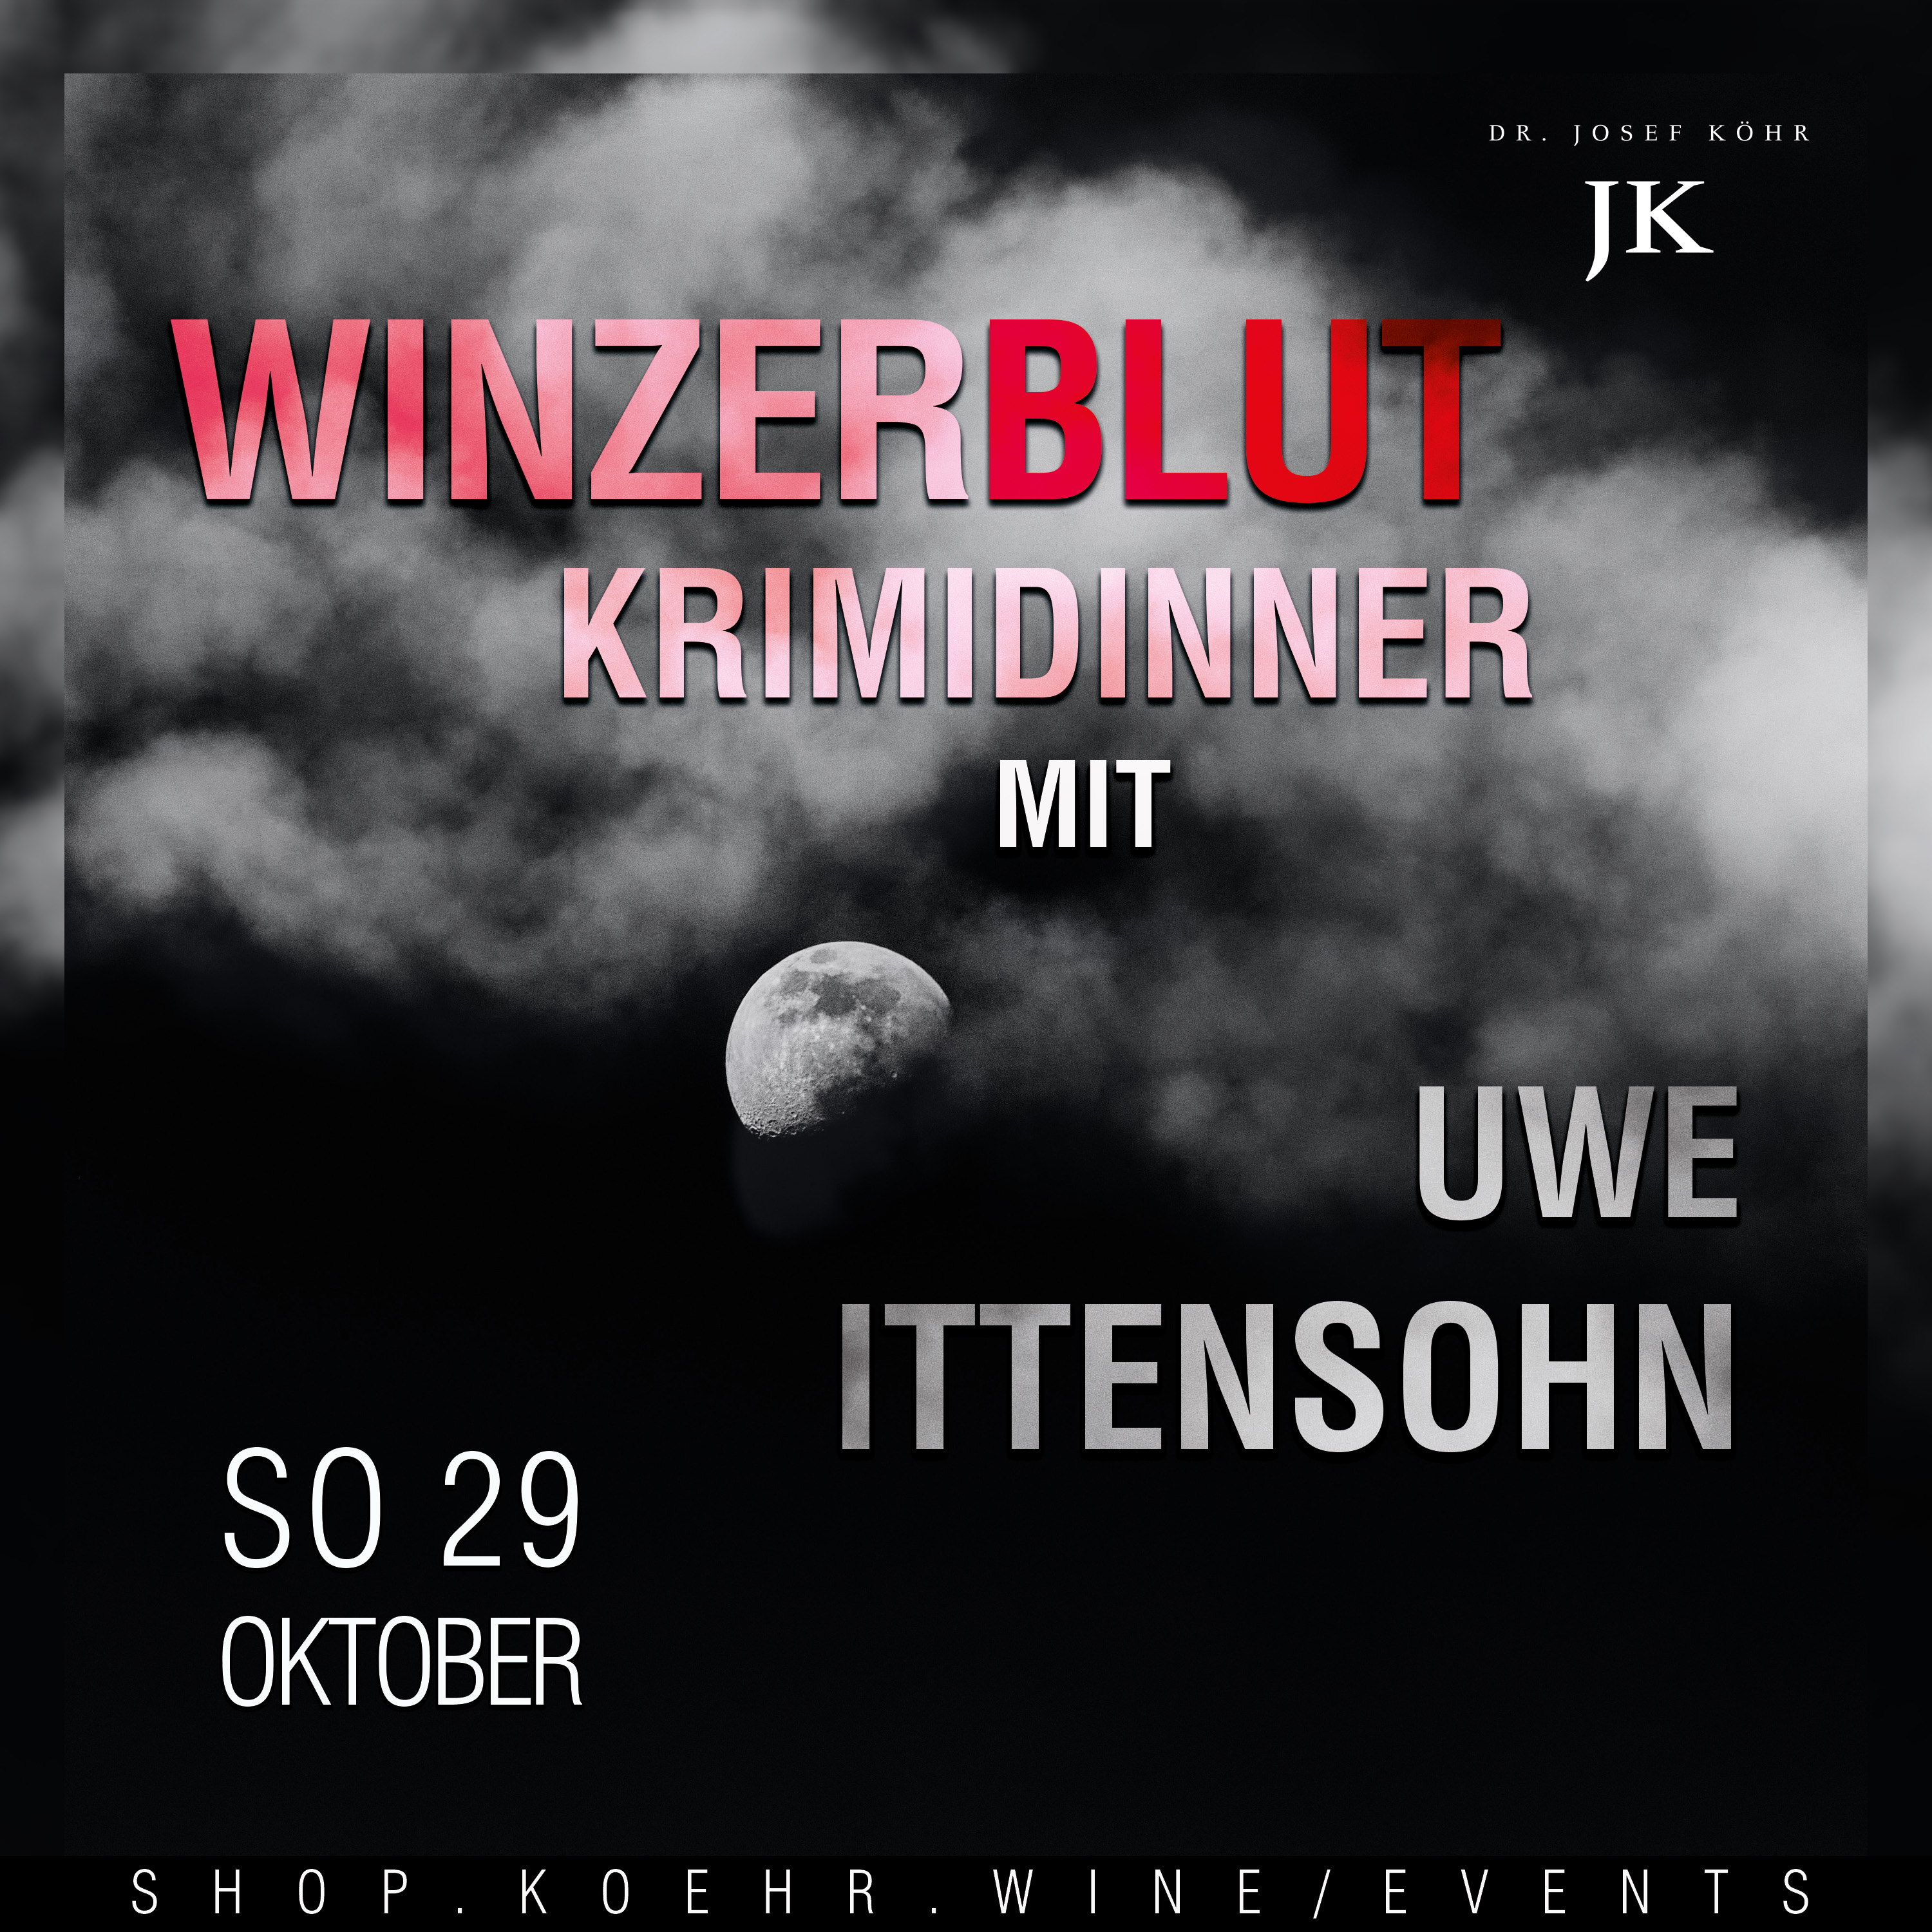 Winzerblut – Krimidinner mit Uwe Ittensohn am 29. Oktober